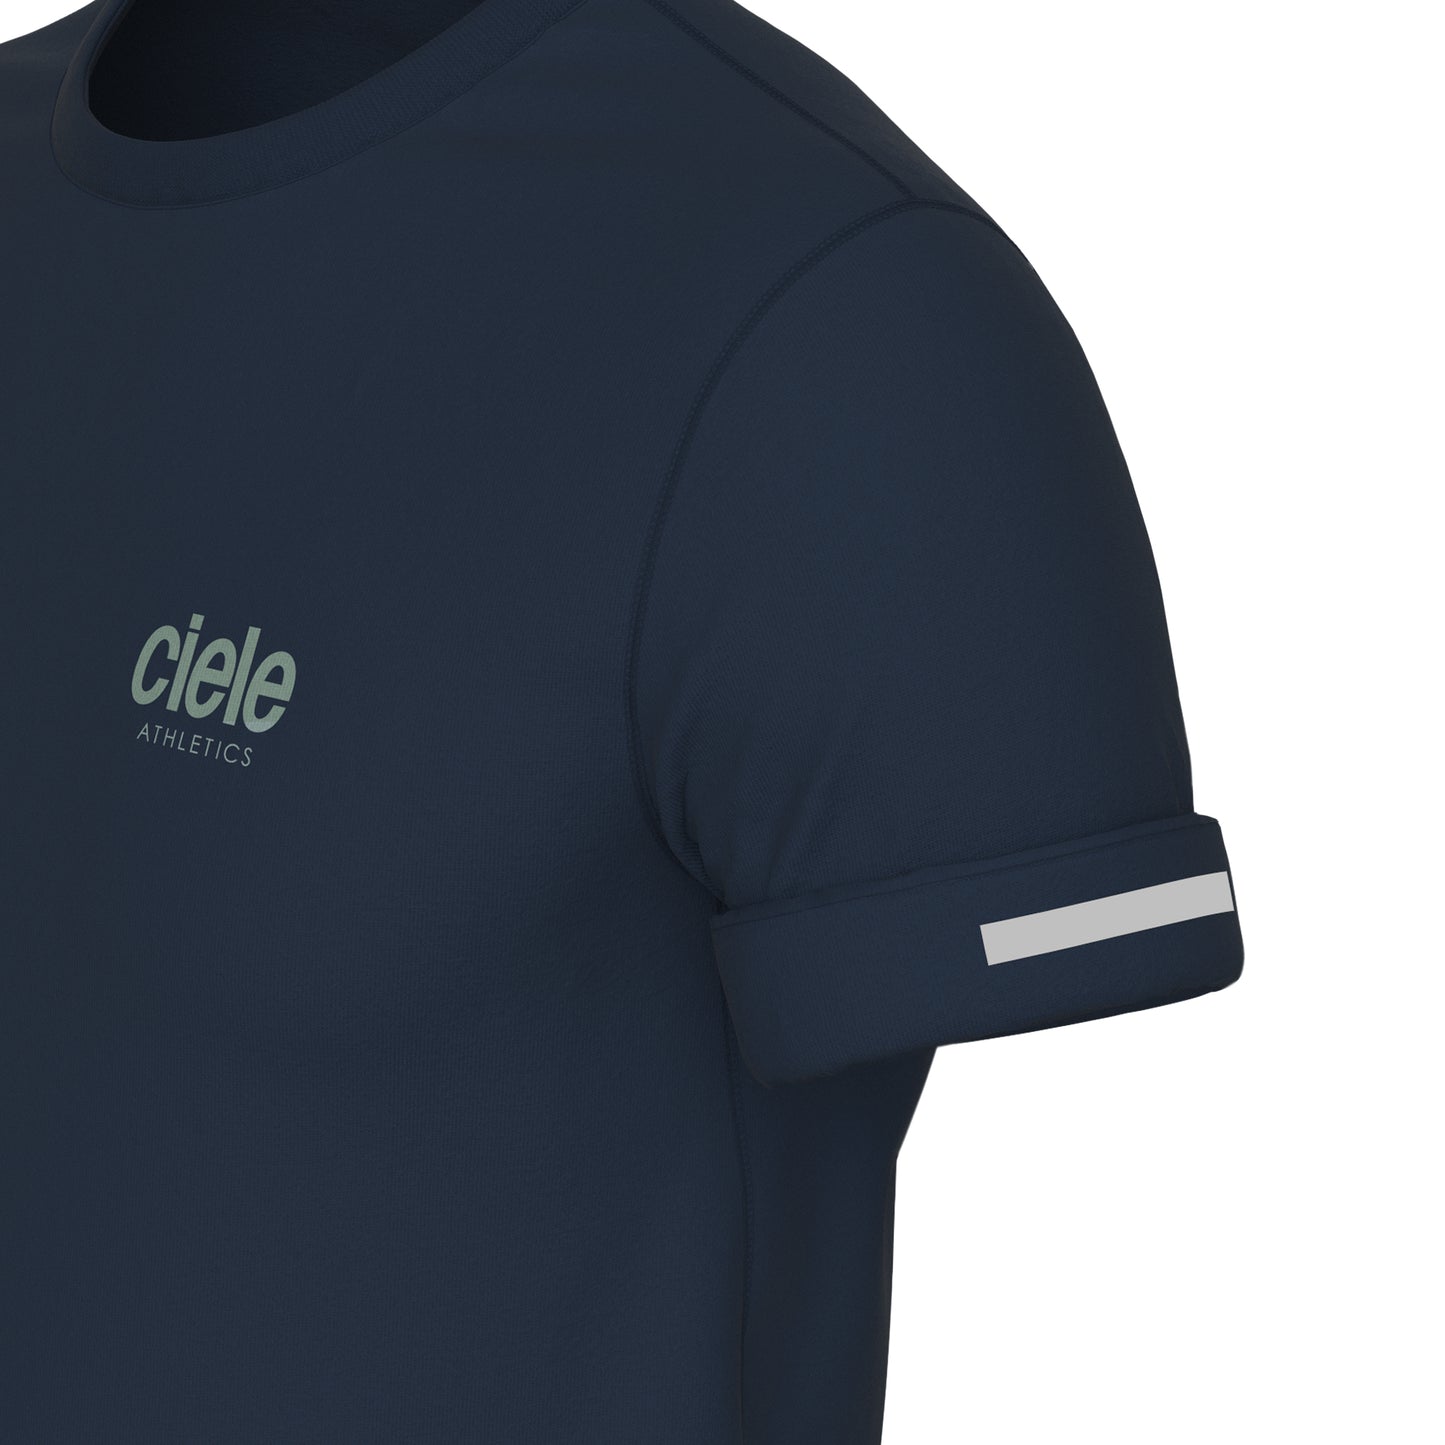 Ciele - NSBTShirt - Athletics - Uniform - Men's